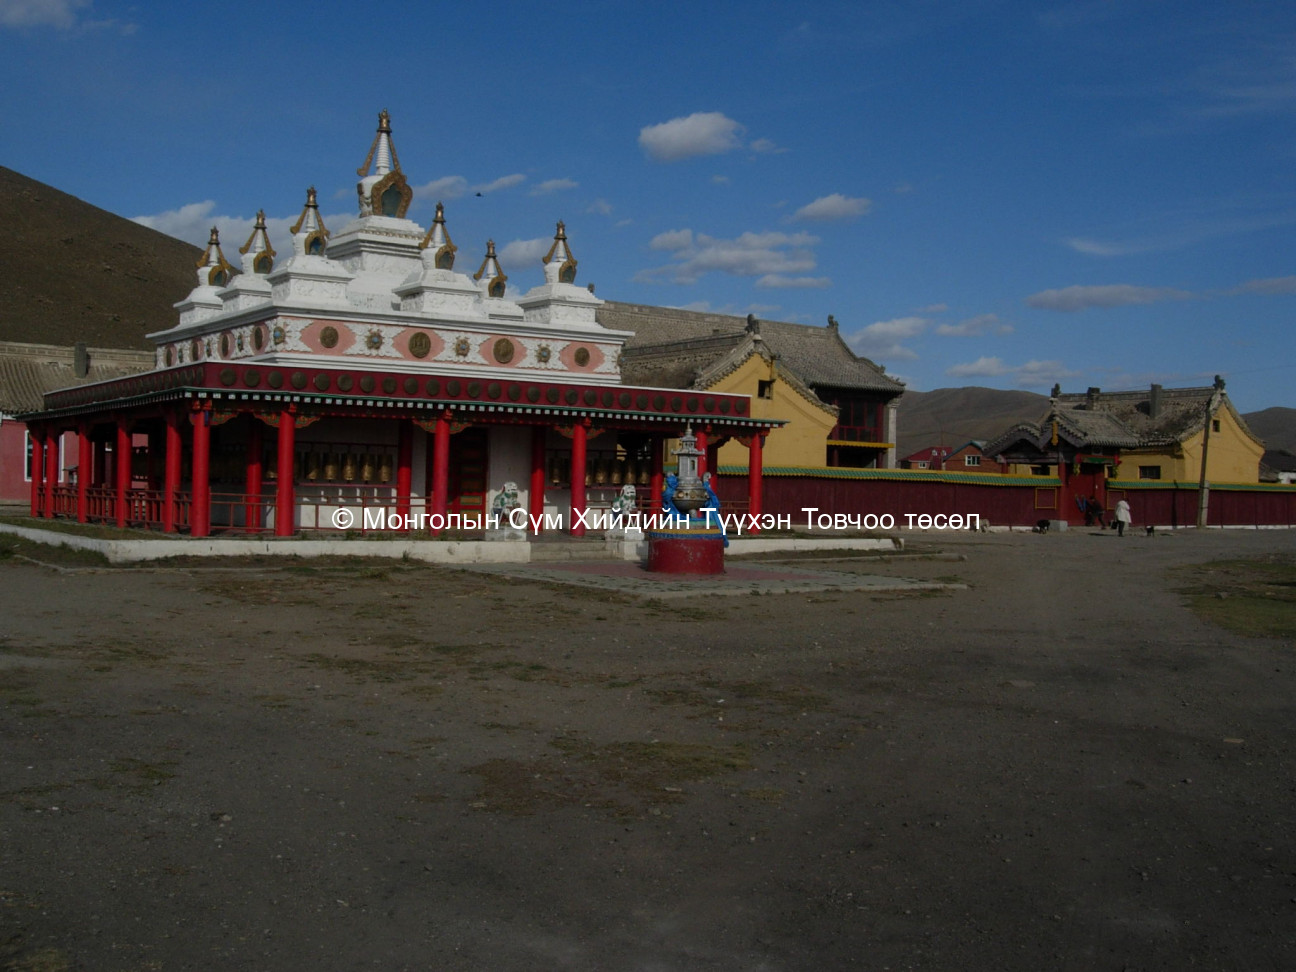 A new stupa west of the Palace 2007